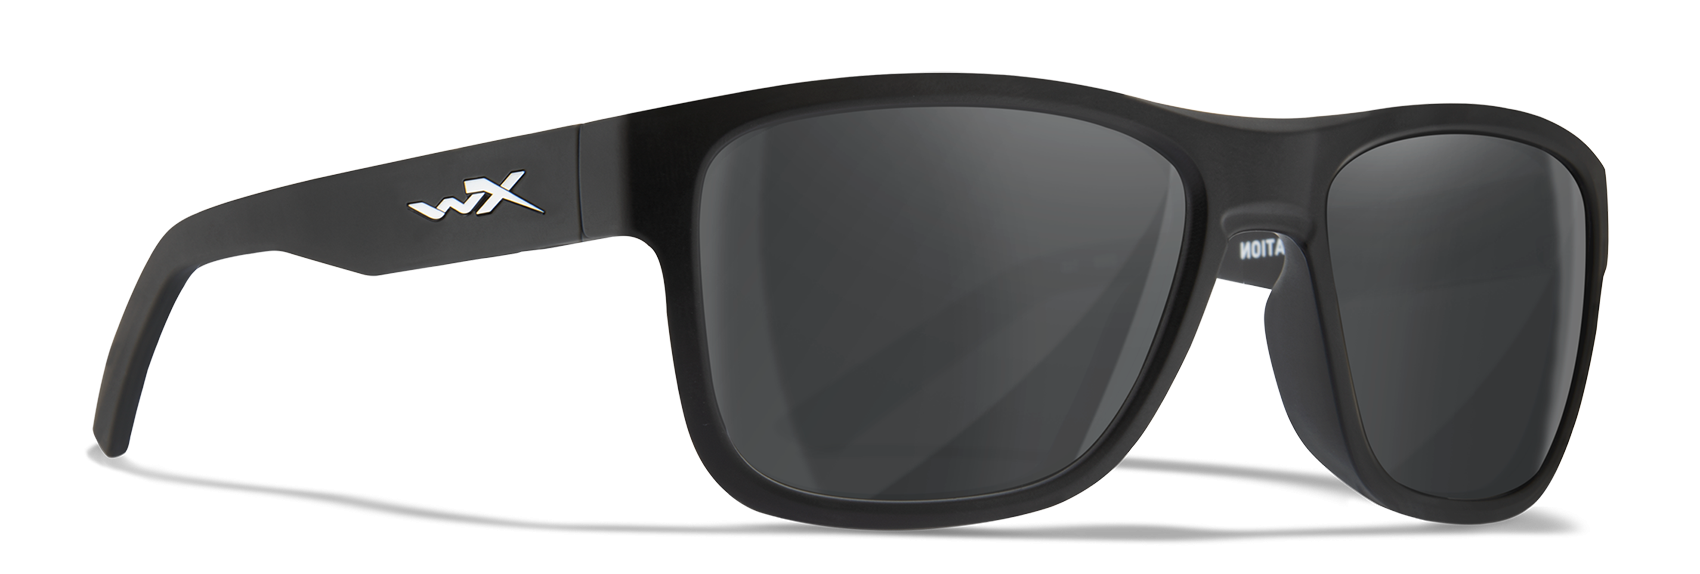 Wiley X WX Ovation Smoke Grey Lens Polycarbonate Sunglasses